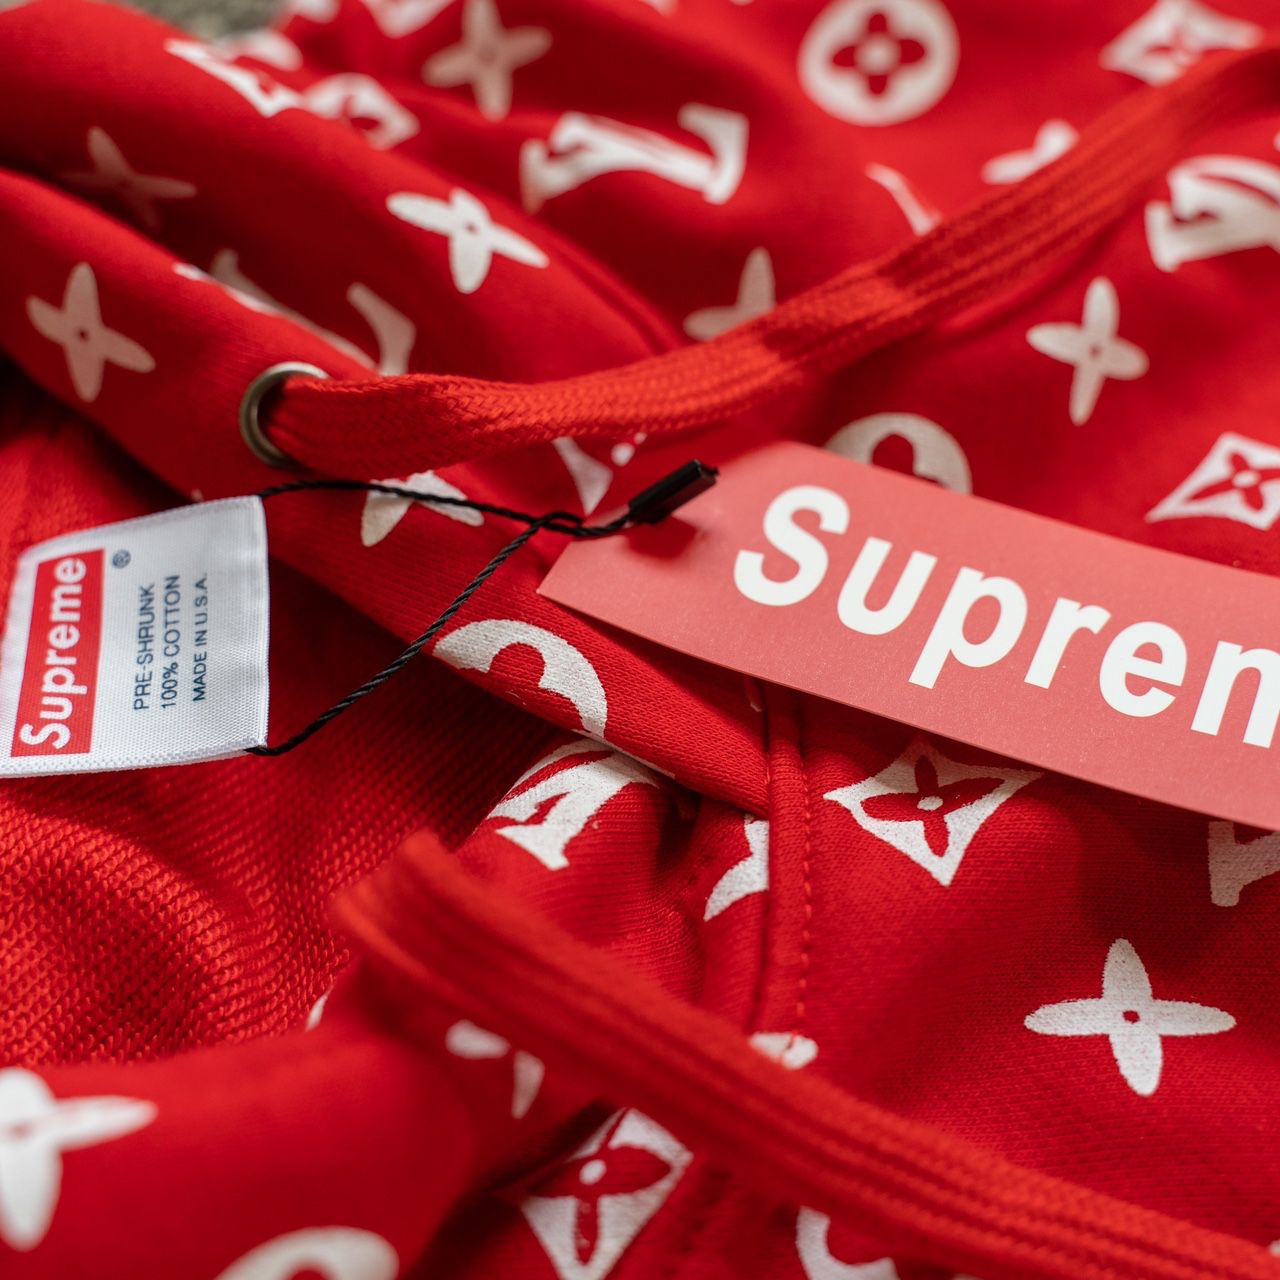 Supreme x Louis Vuitton Box Logo Hooded Sweatshirt for Sale in